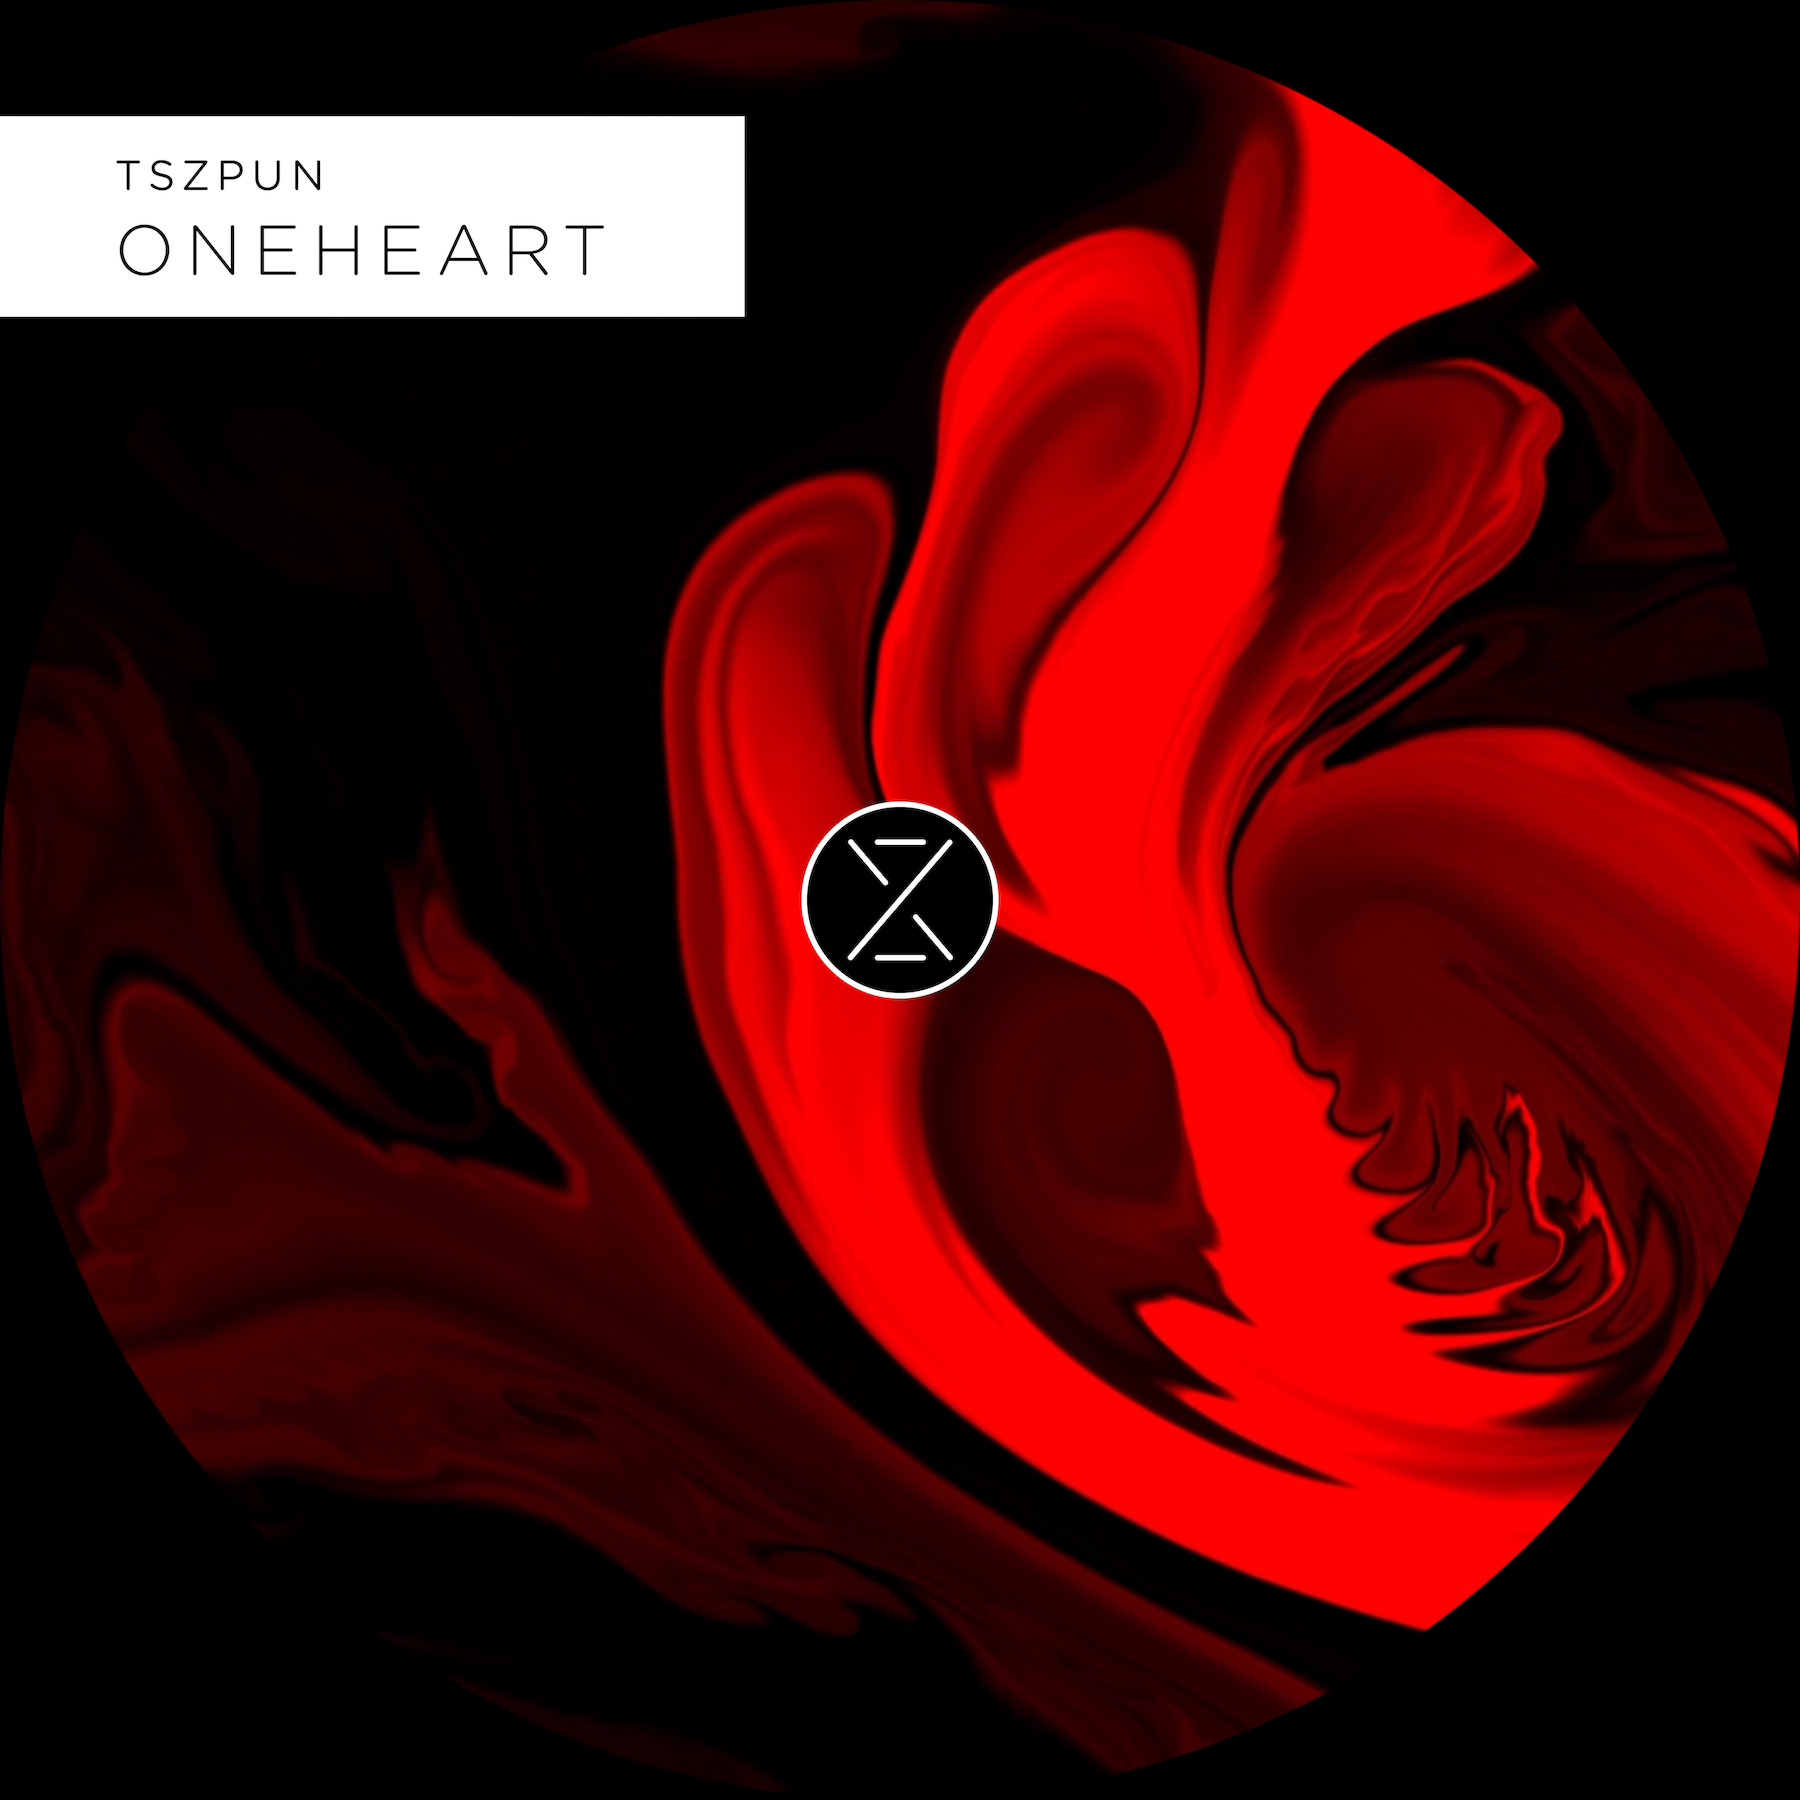 Tszpun's Oneheart track sleeve artwork